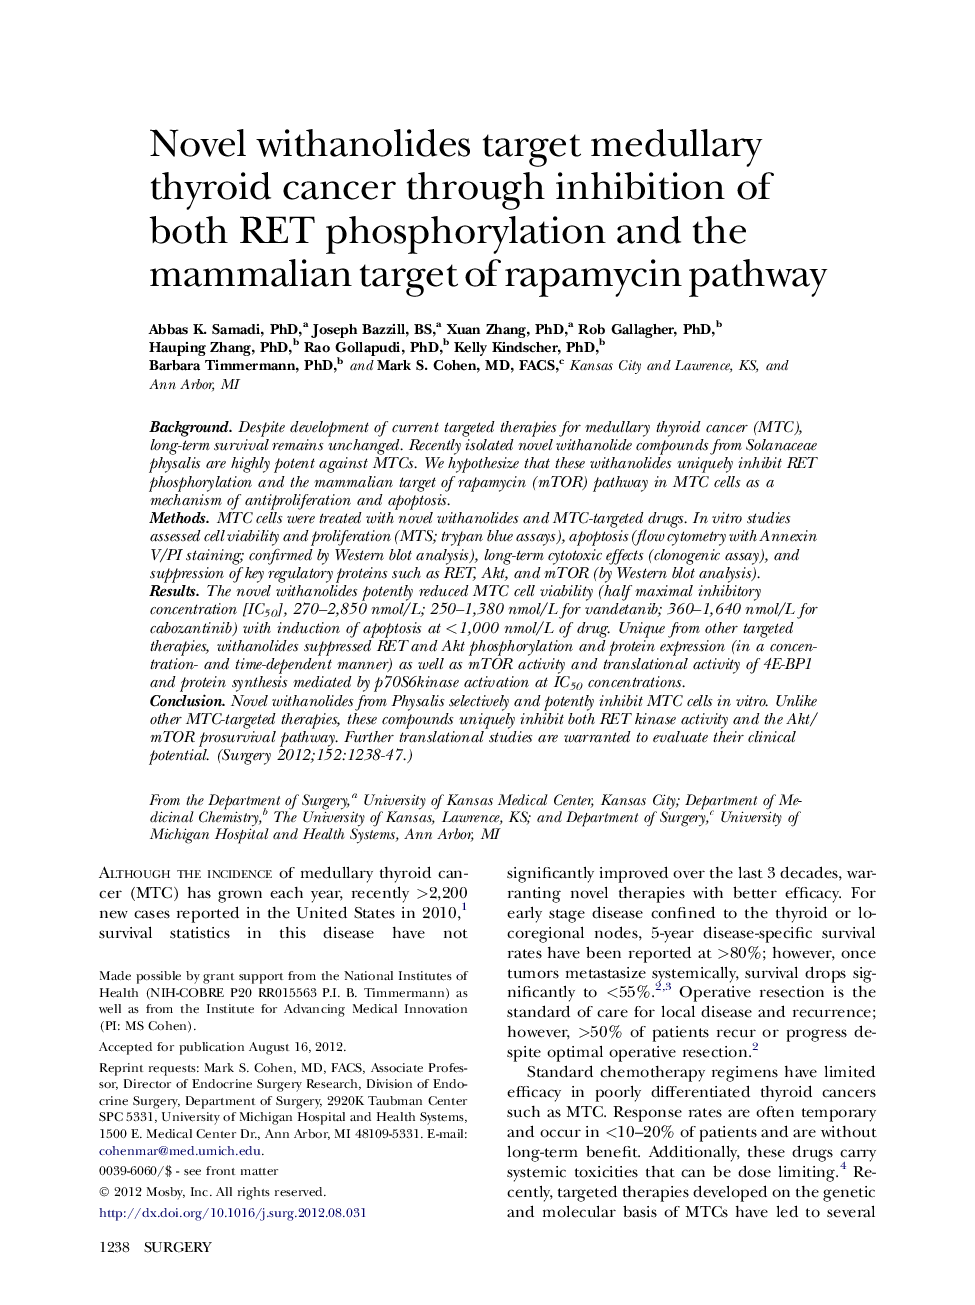 Novel withanolides target medullary thyroid cancer through inhibition of both RET phosphorylation and the mammalian target of rapamycin pathway 